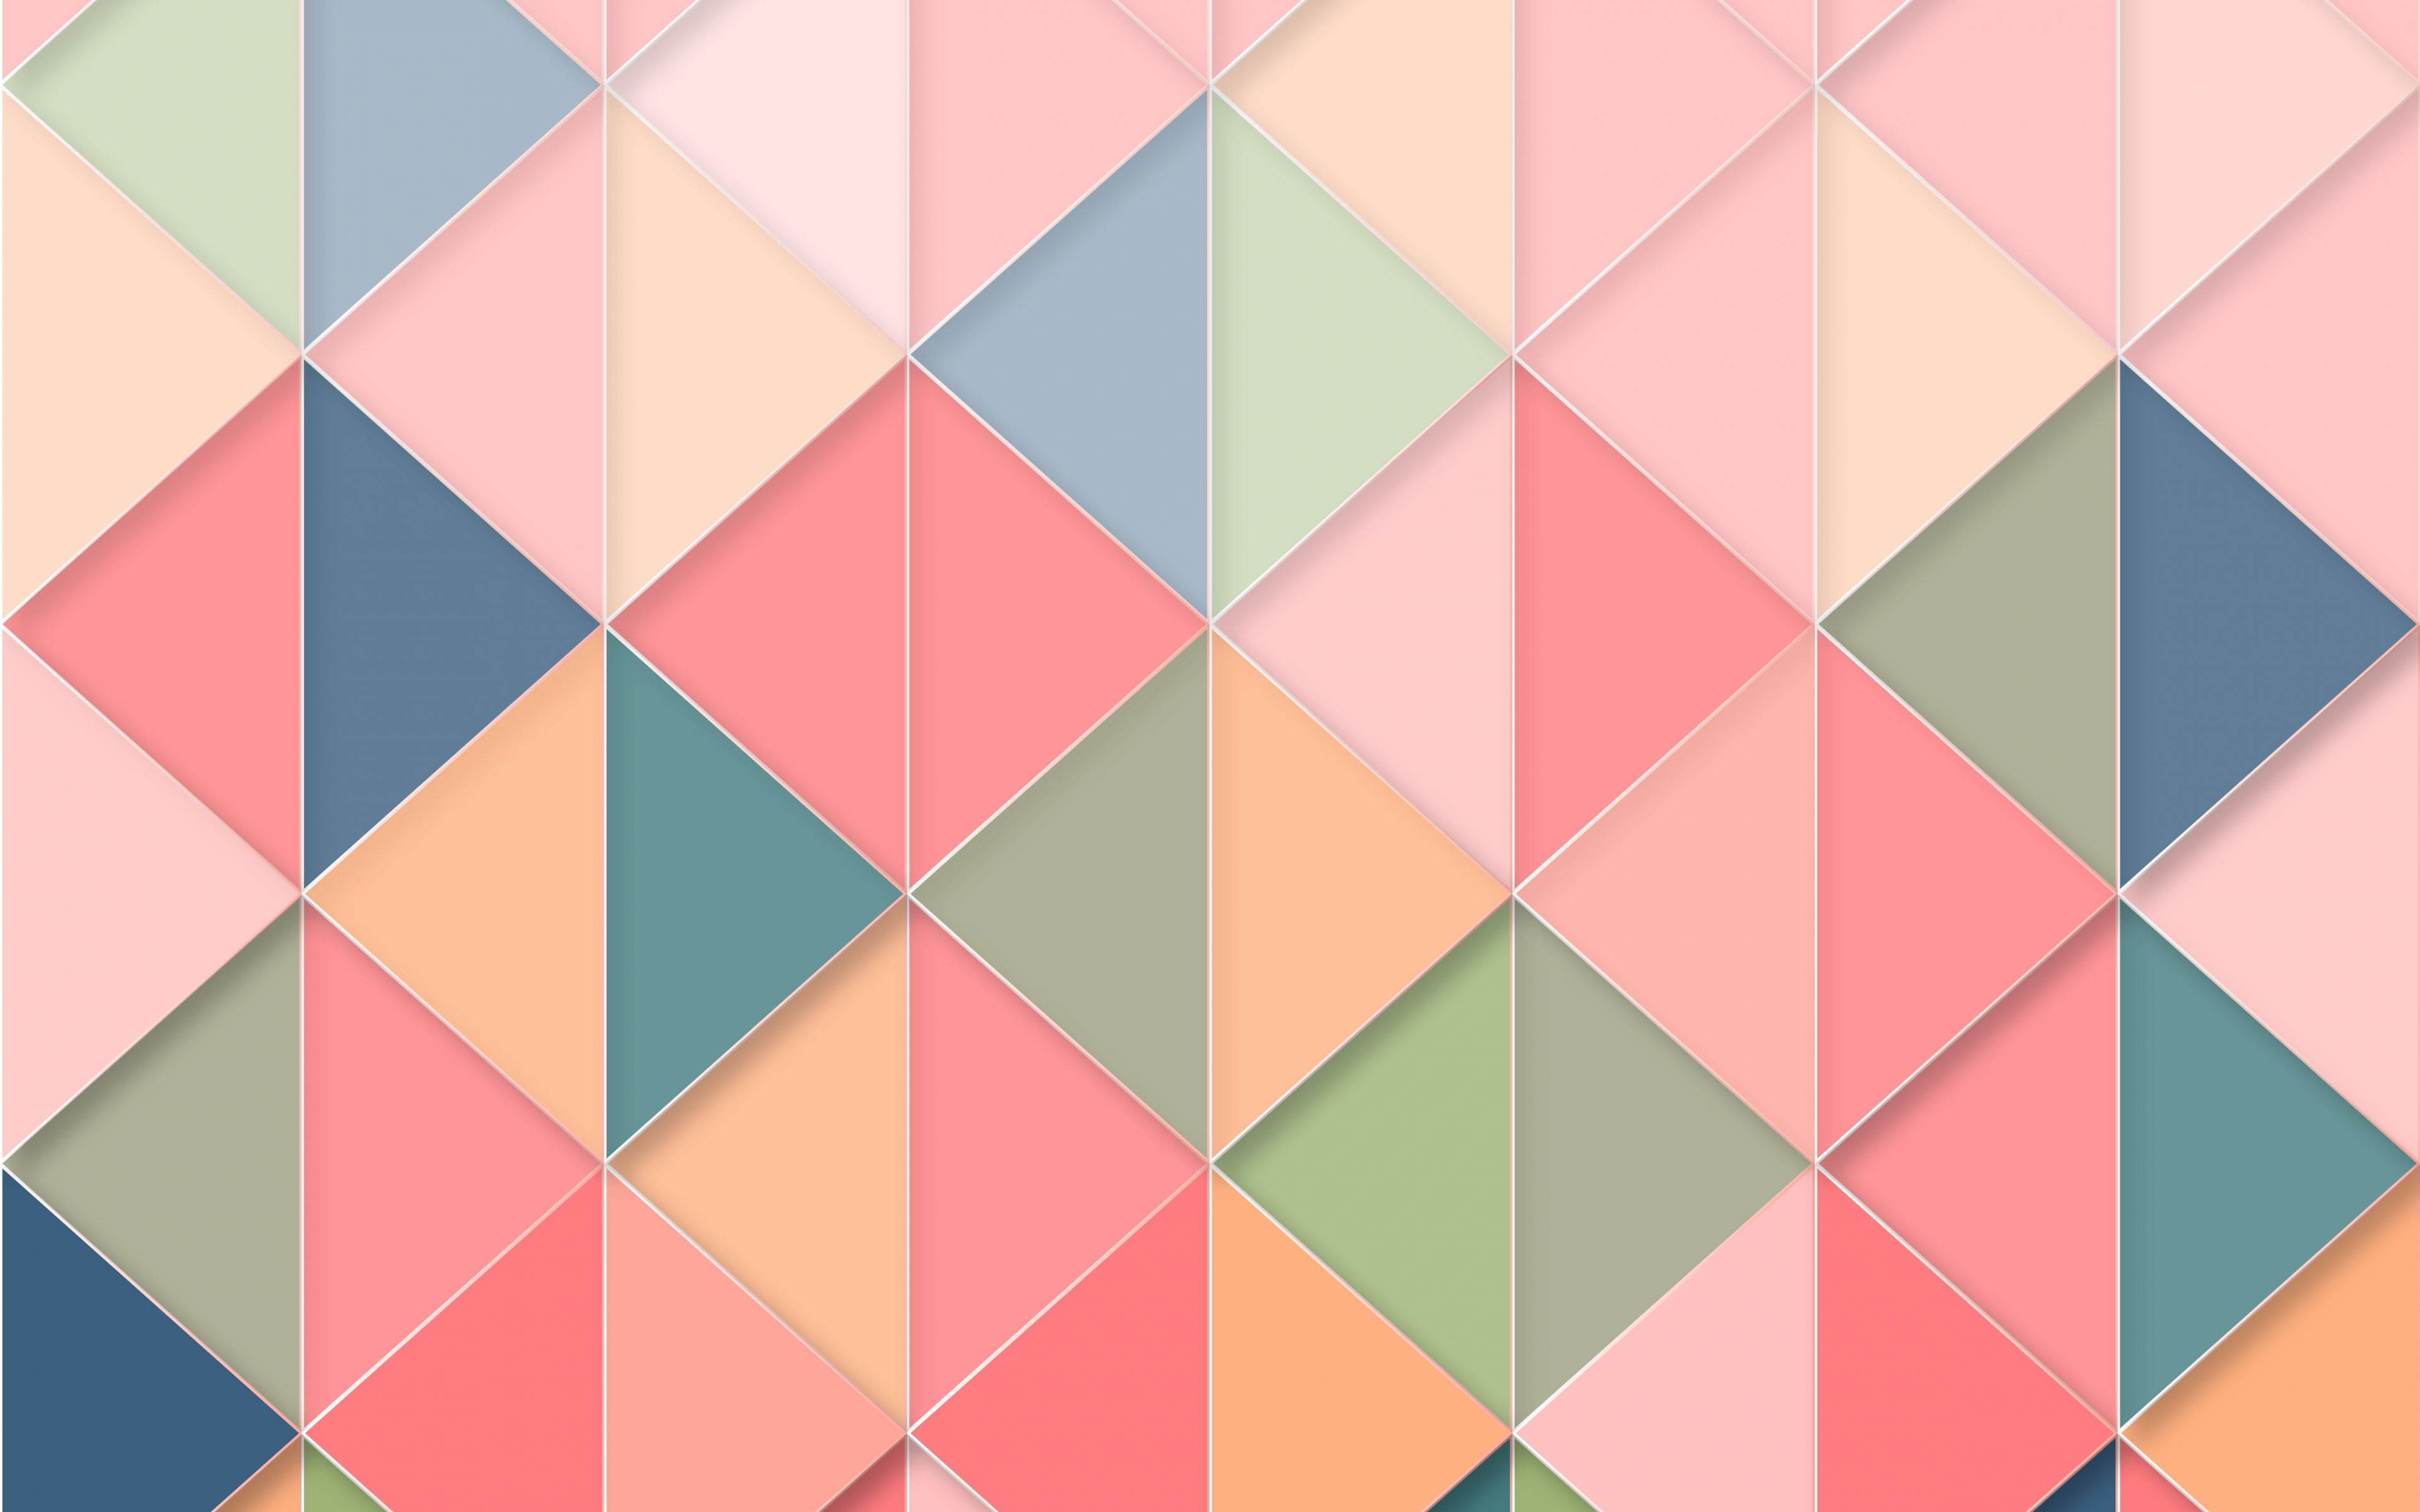 Download wallpaper 3840x2400 triangles, geometric, abstract, pattern 4k  wallaper, 4k ultra hd 16:10 wallpaper, 3840x2400 hd background, 2304